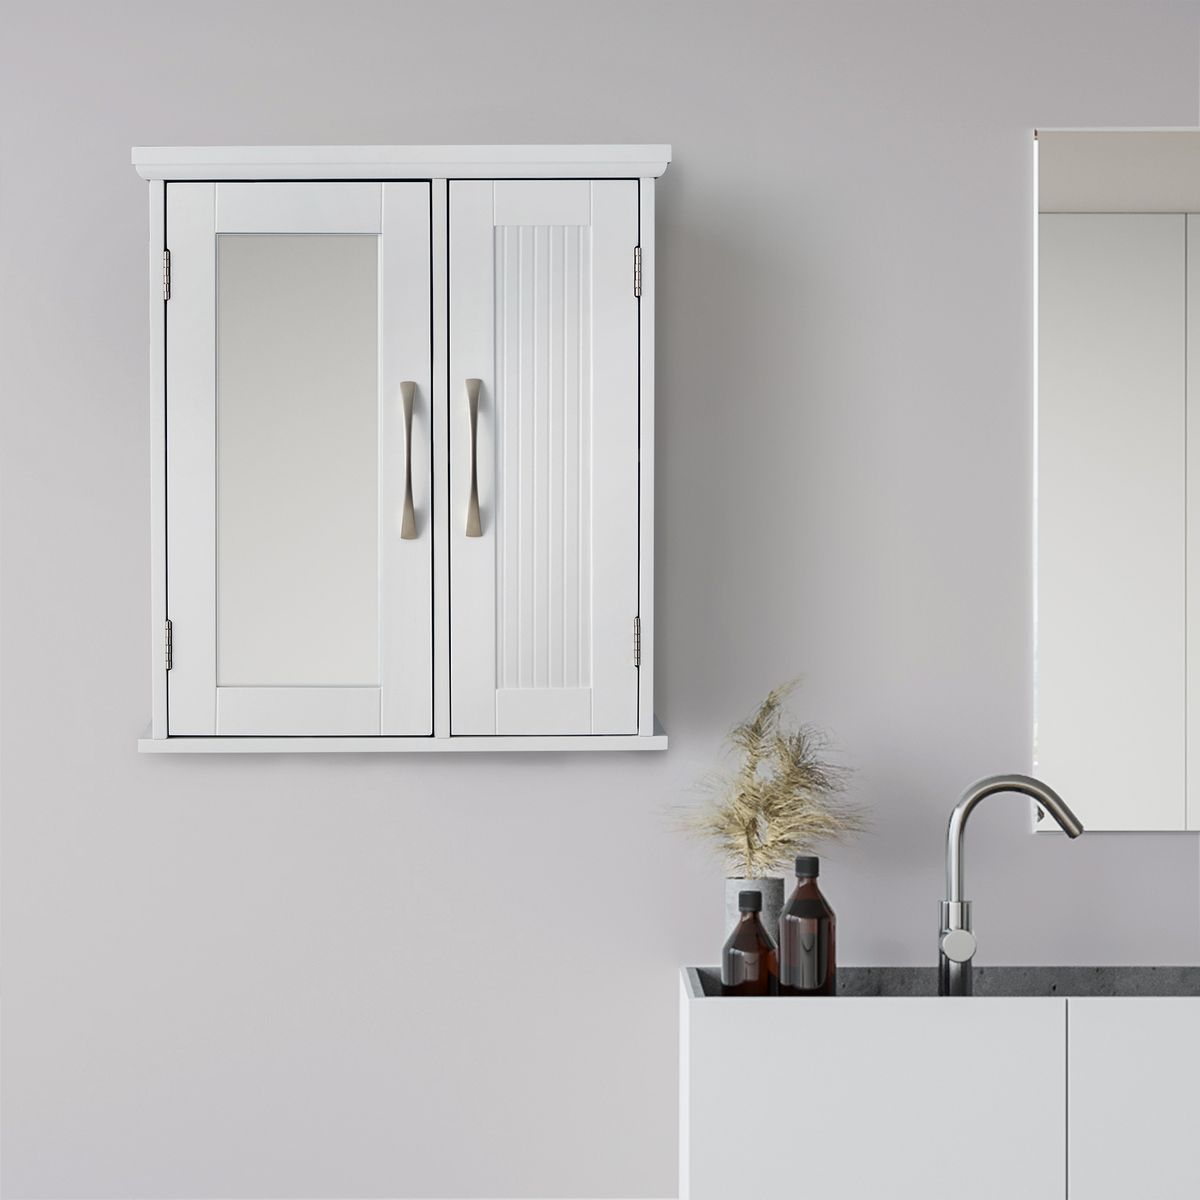 teamson home salle de bain en bois miroir mural armoire a pharmacie avec miroir et etageres reglables blanc ehf-f0008